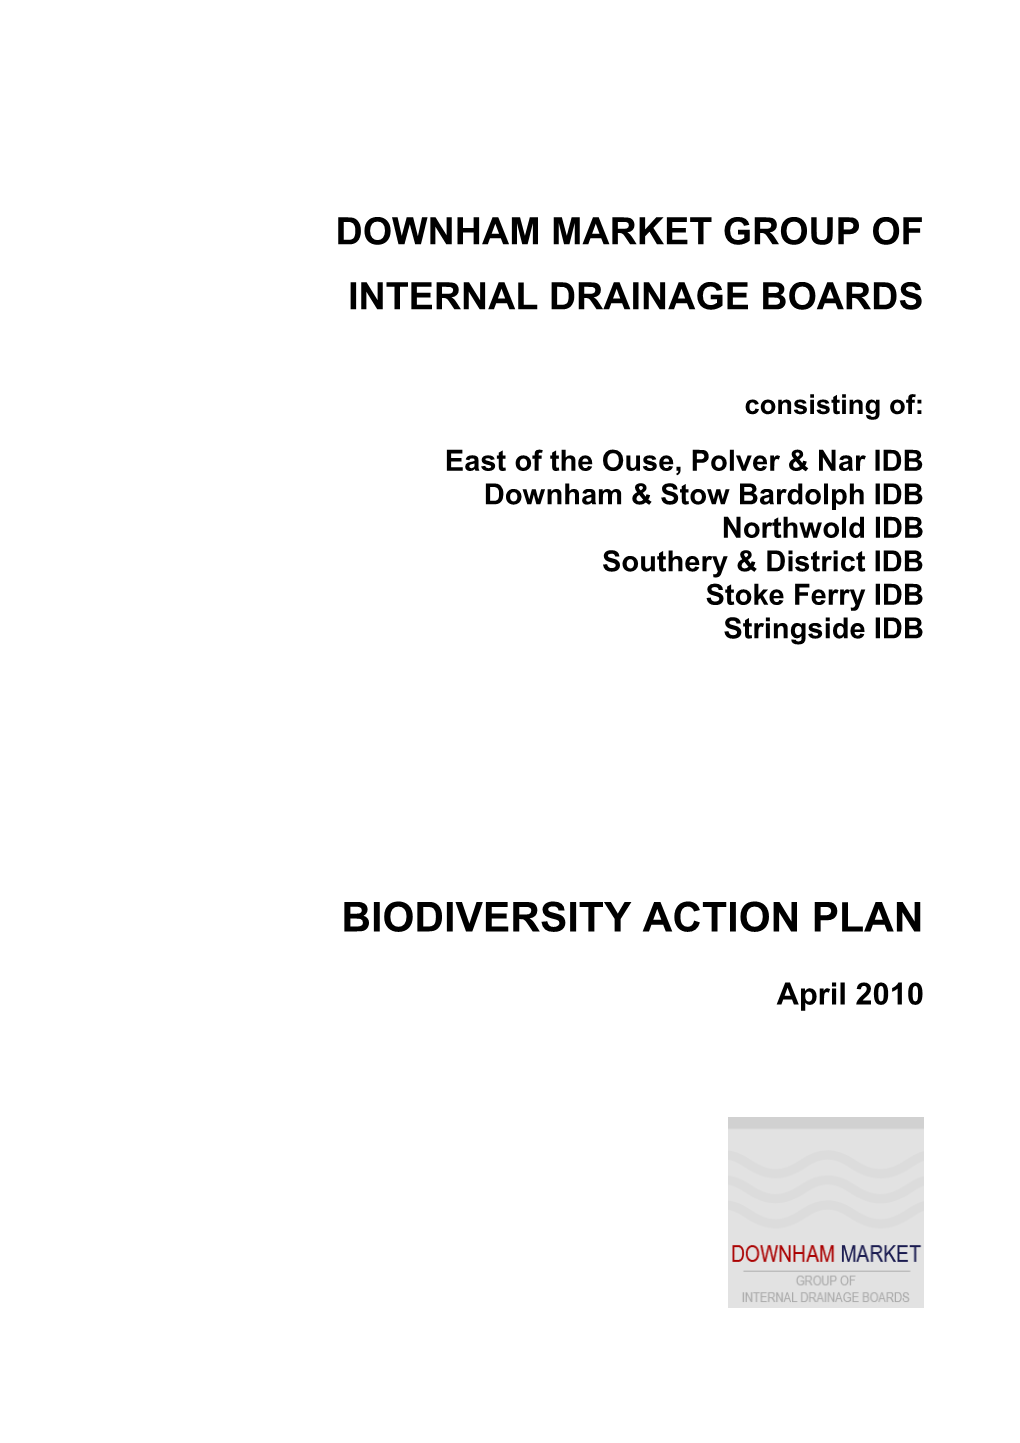 IDB Biodiversity Action Plan Template